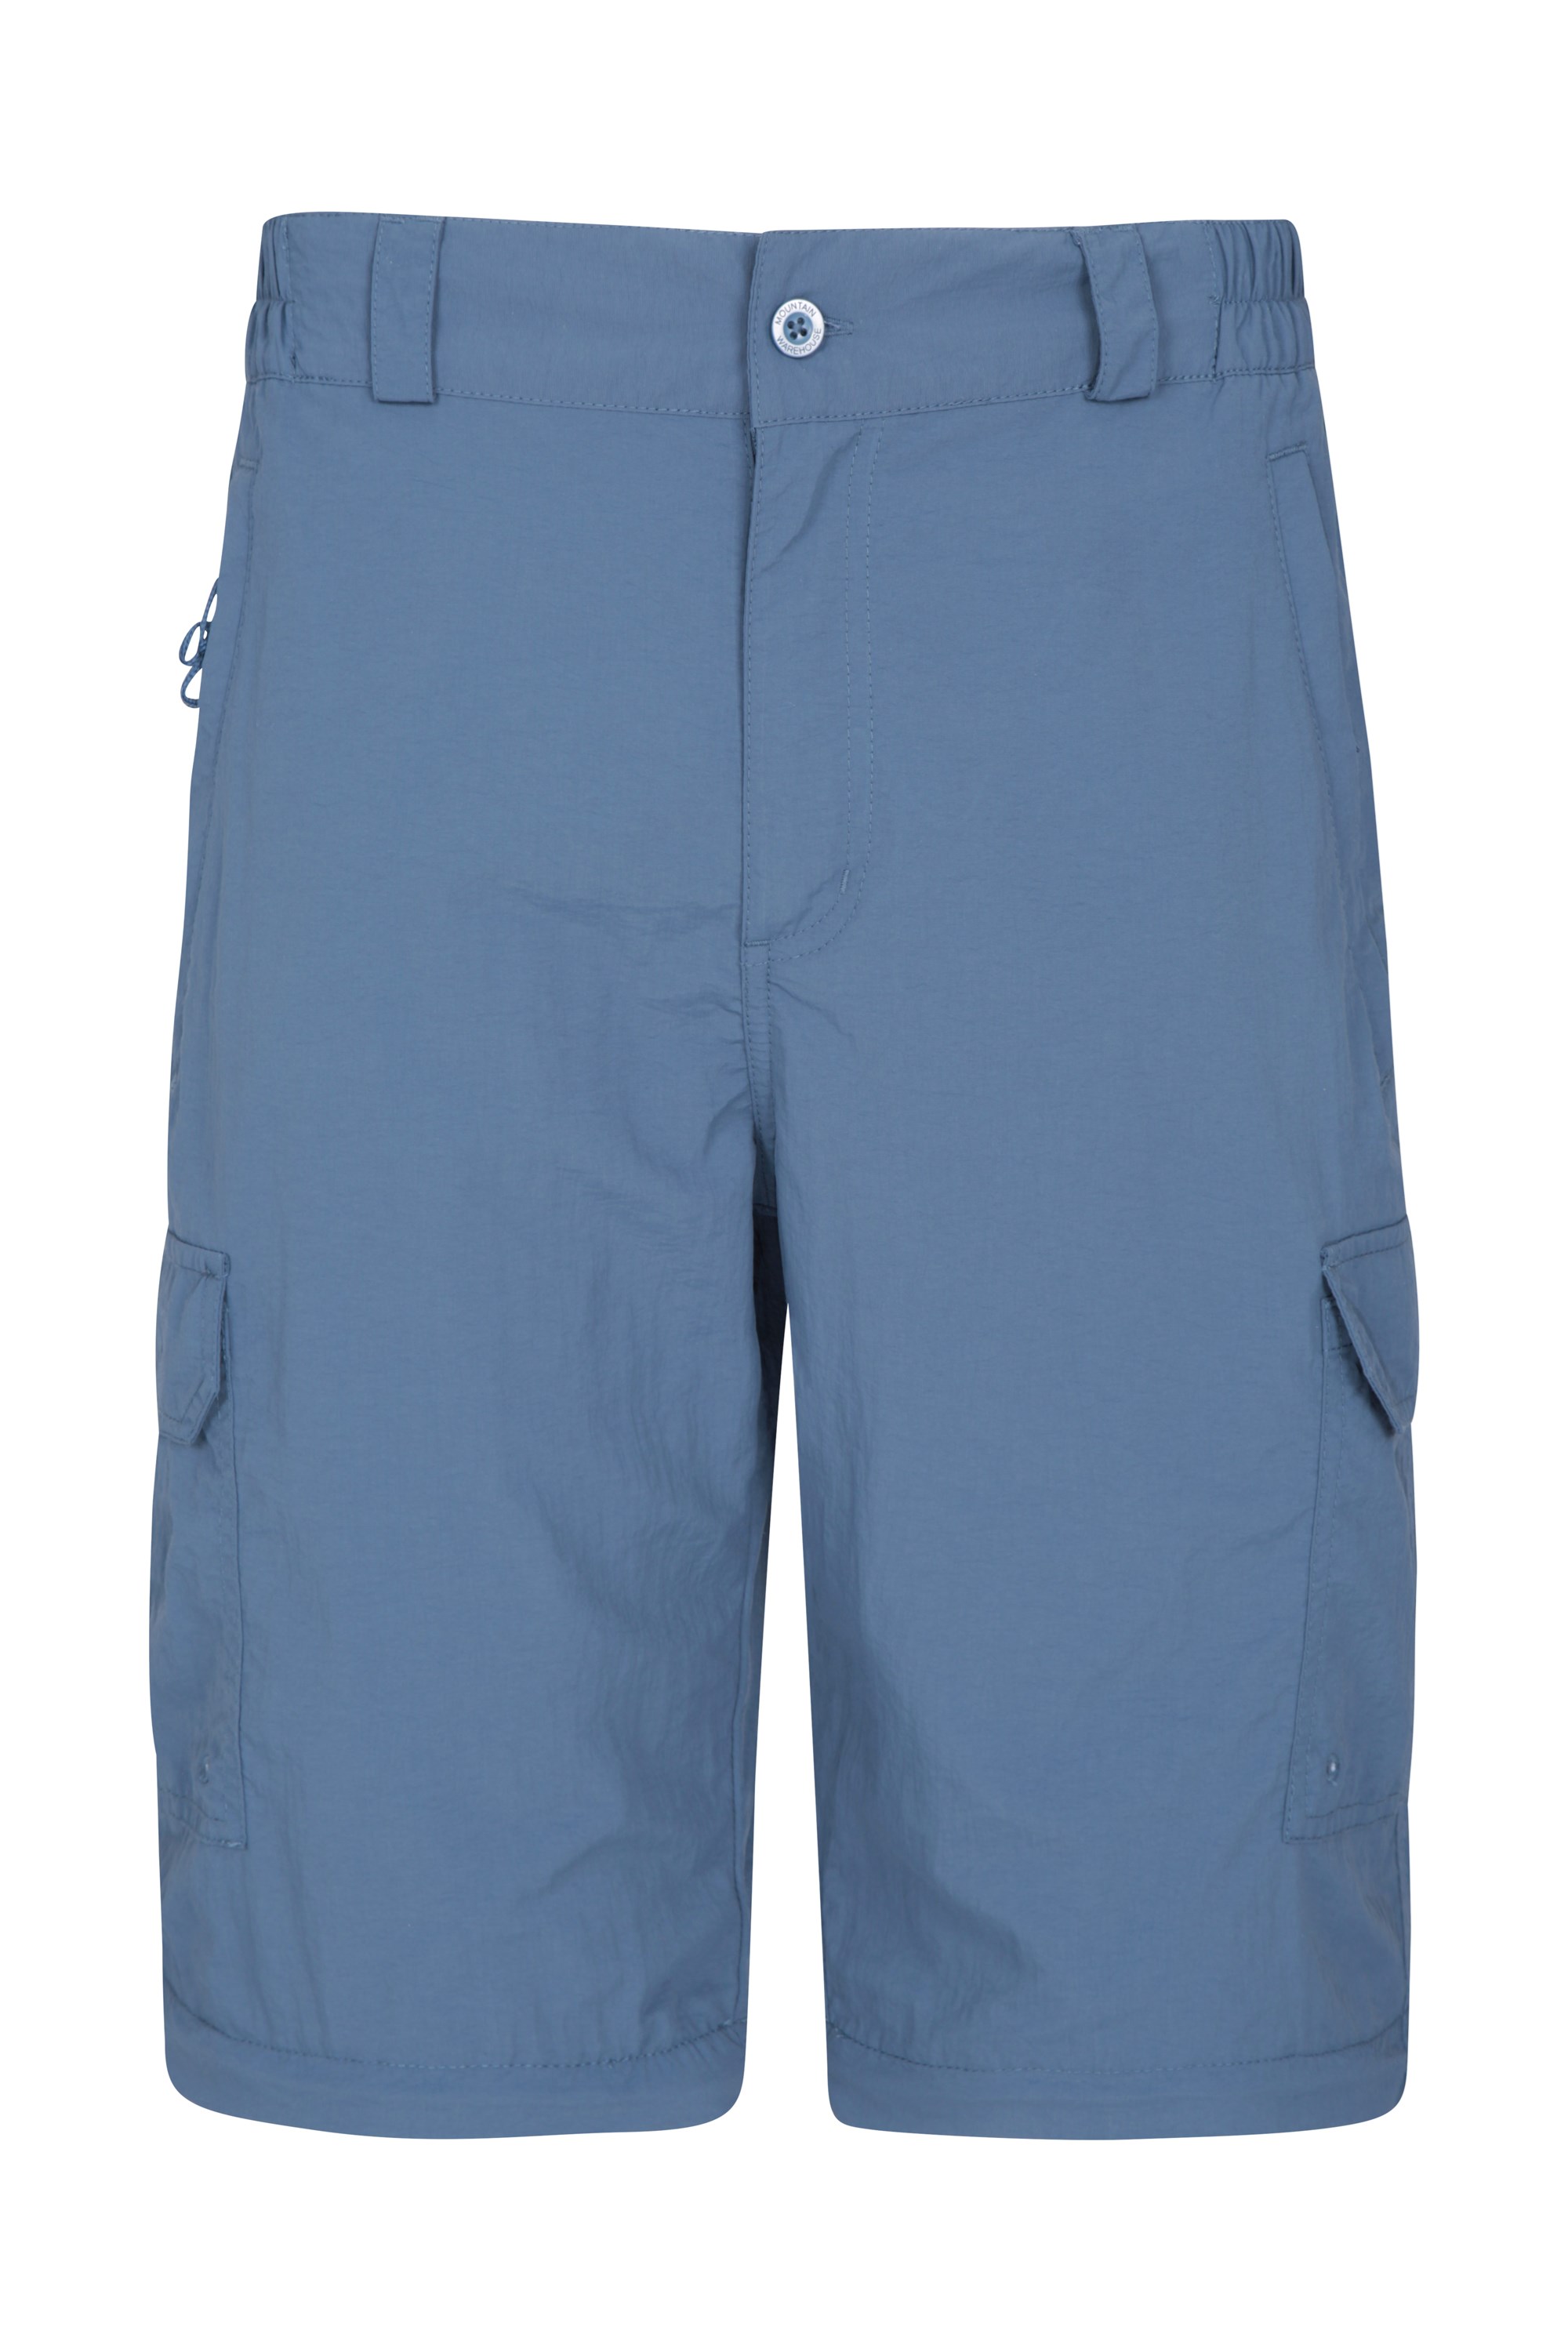 Mountain Warehouse Mens Explore Short Zip-Off Trouser Zip-Off Trousers 